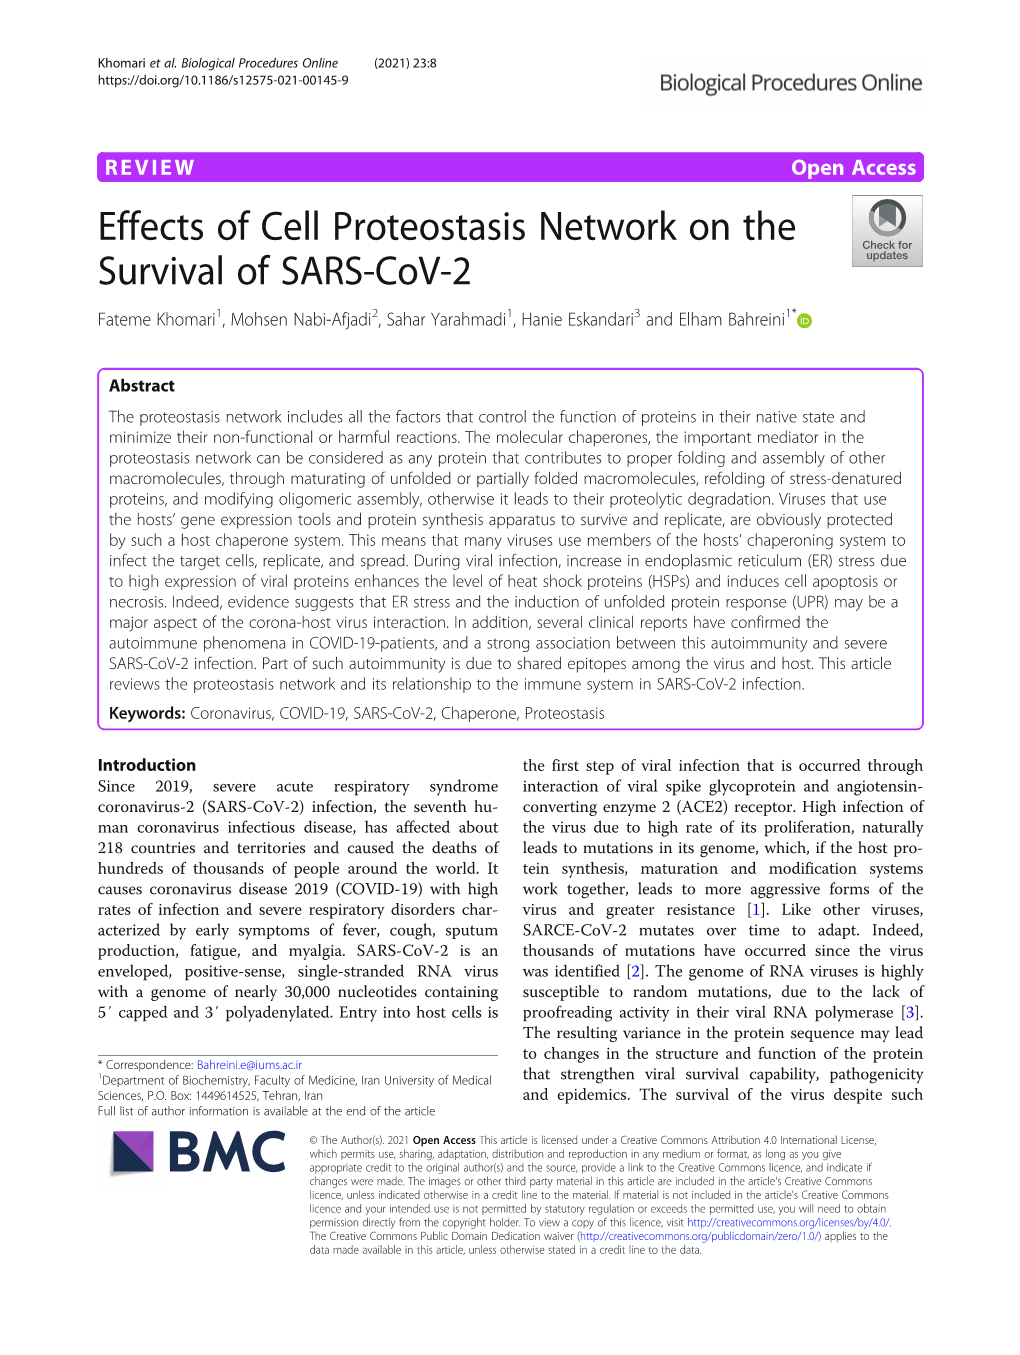 Effects of Cell Proteostasis Network on the Survival of SARS-Cov-2 Fateme Khomari1, Mohsen Nabi-Afjadi2, Sahar Yarahmadi1, Hanie Eskandari3 and Elham Bahreini1*